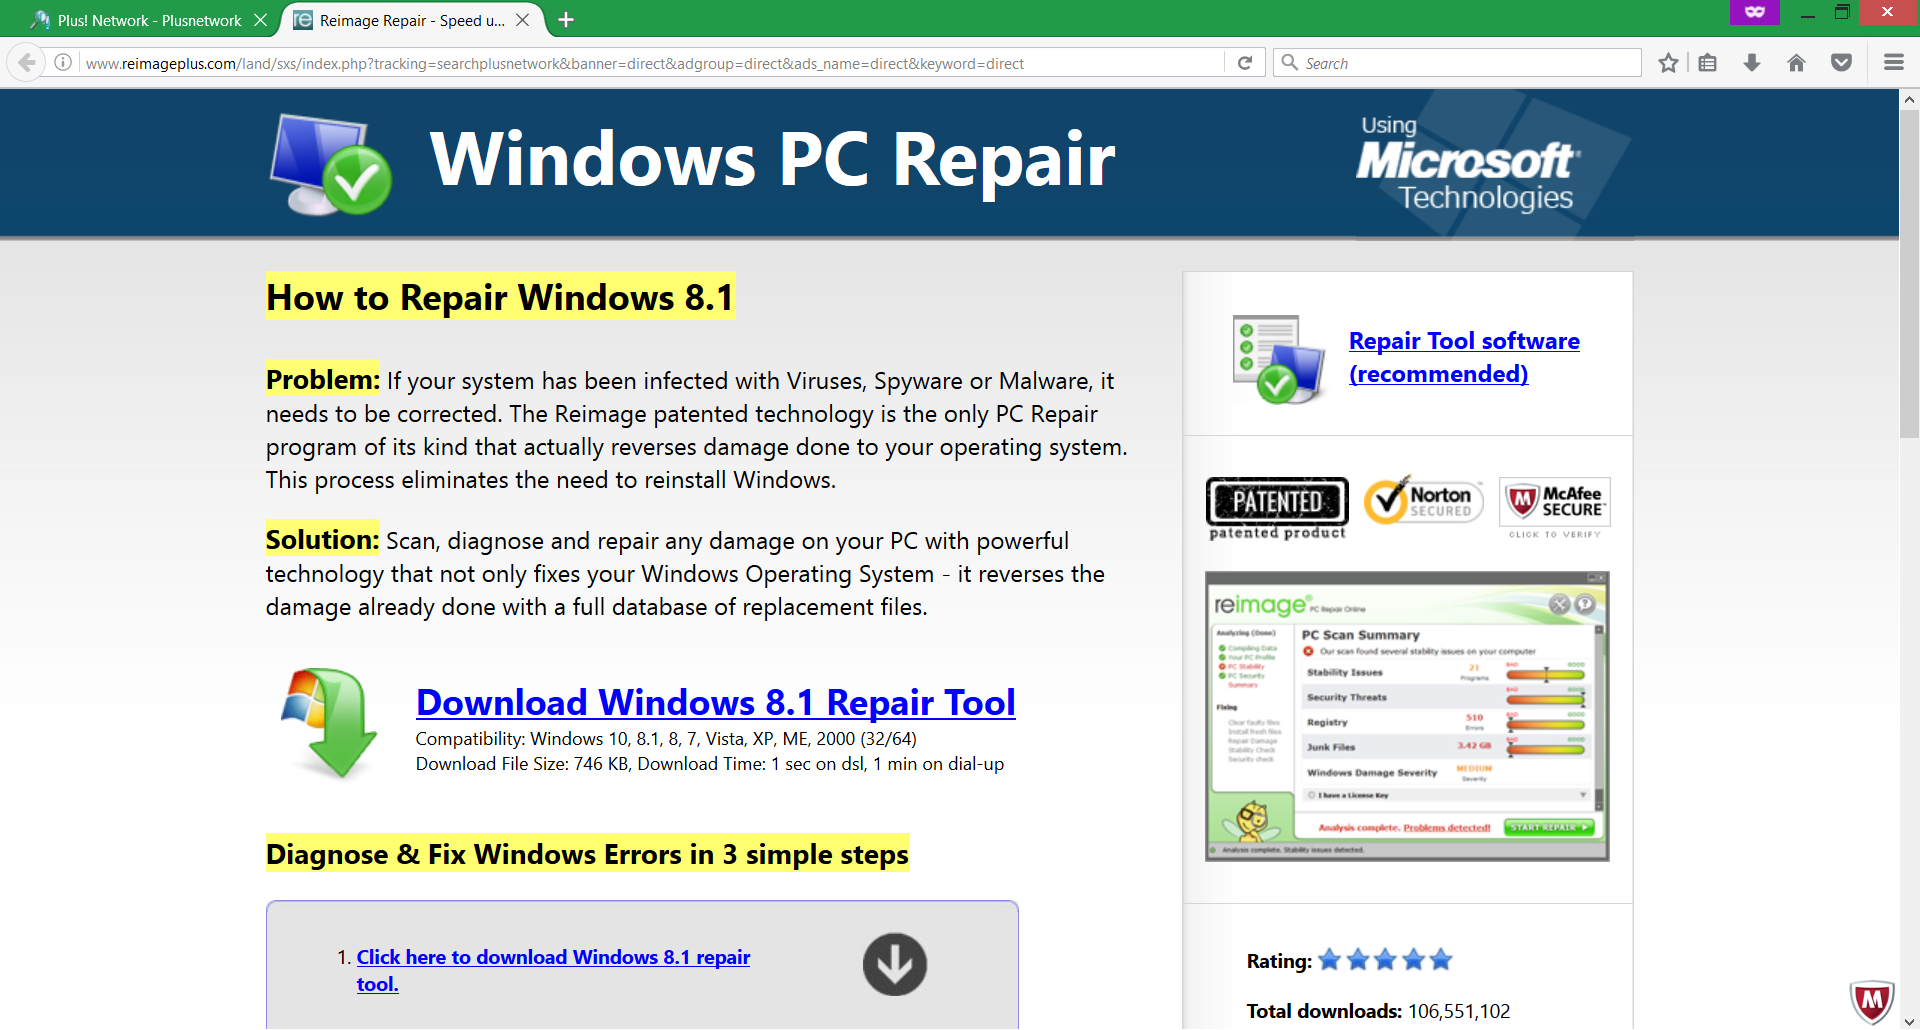 windows-pc-repair-reimage-repair-potentiallly-unwanted-program-provided-via-plus-network